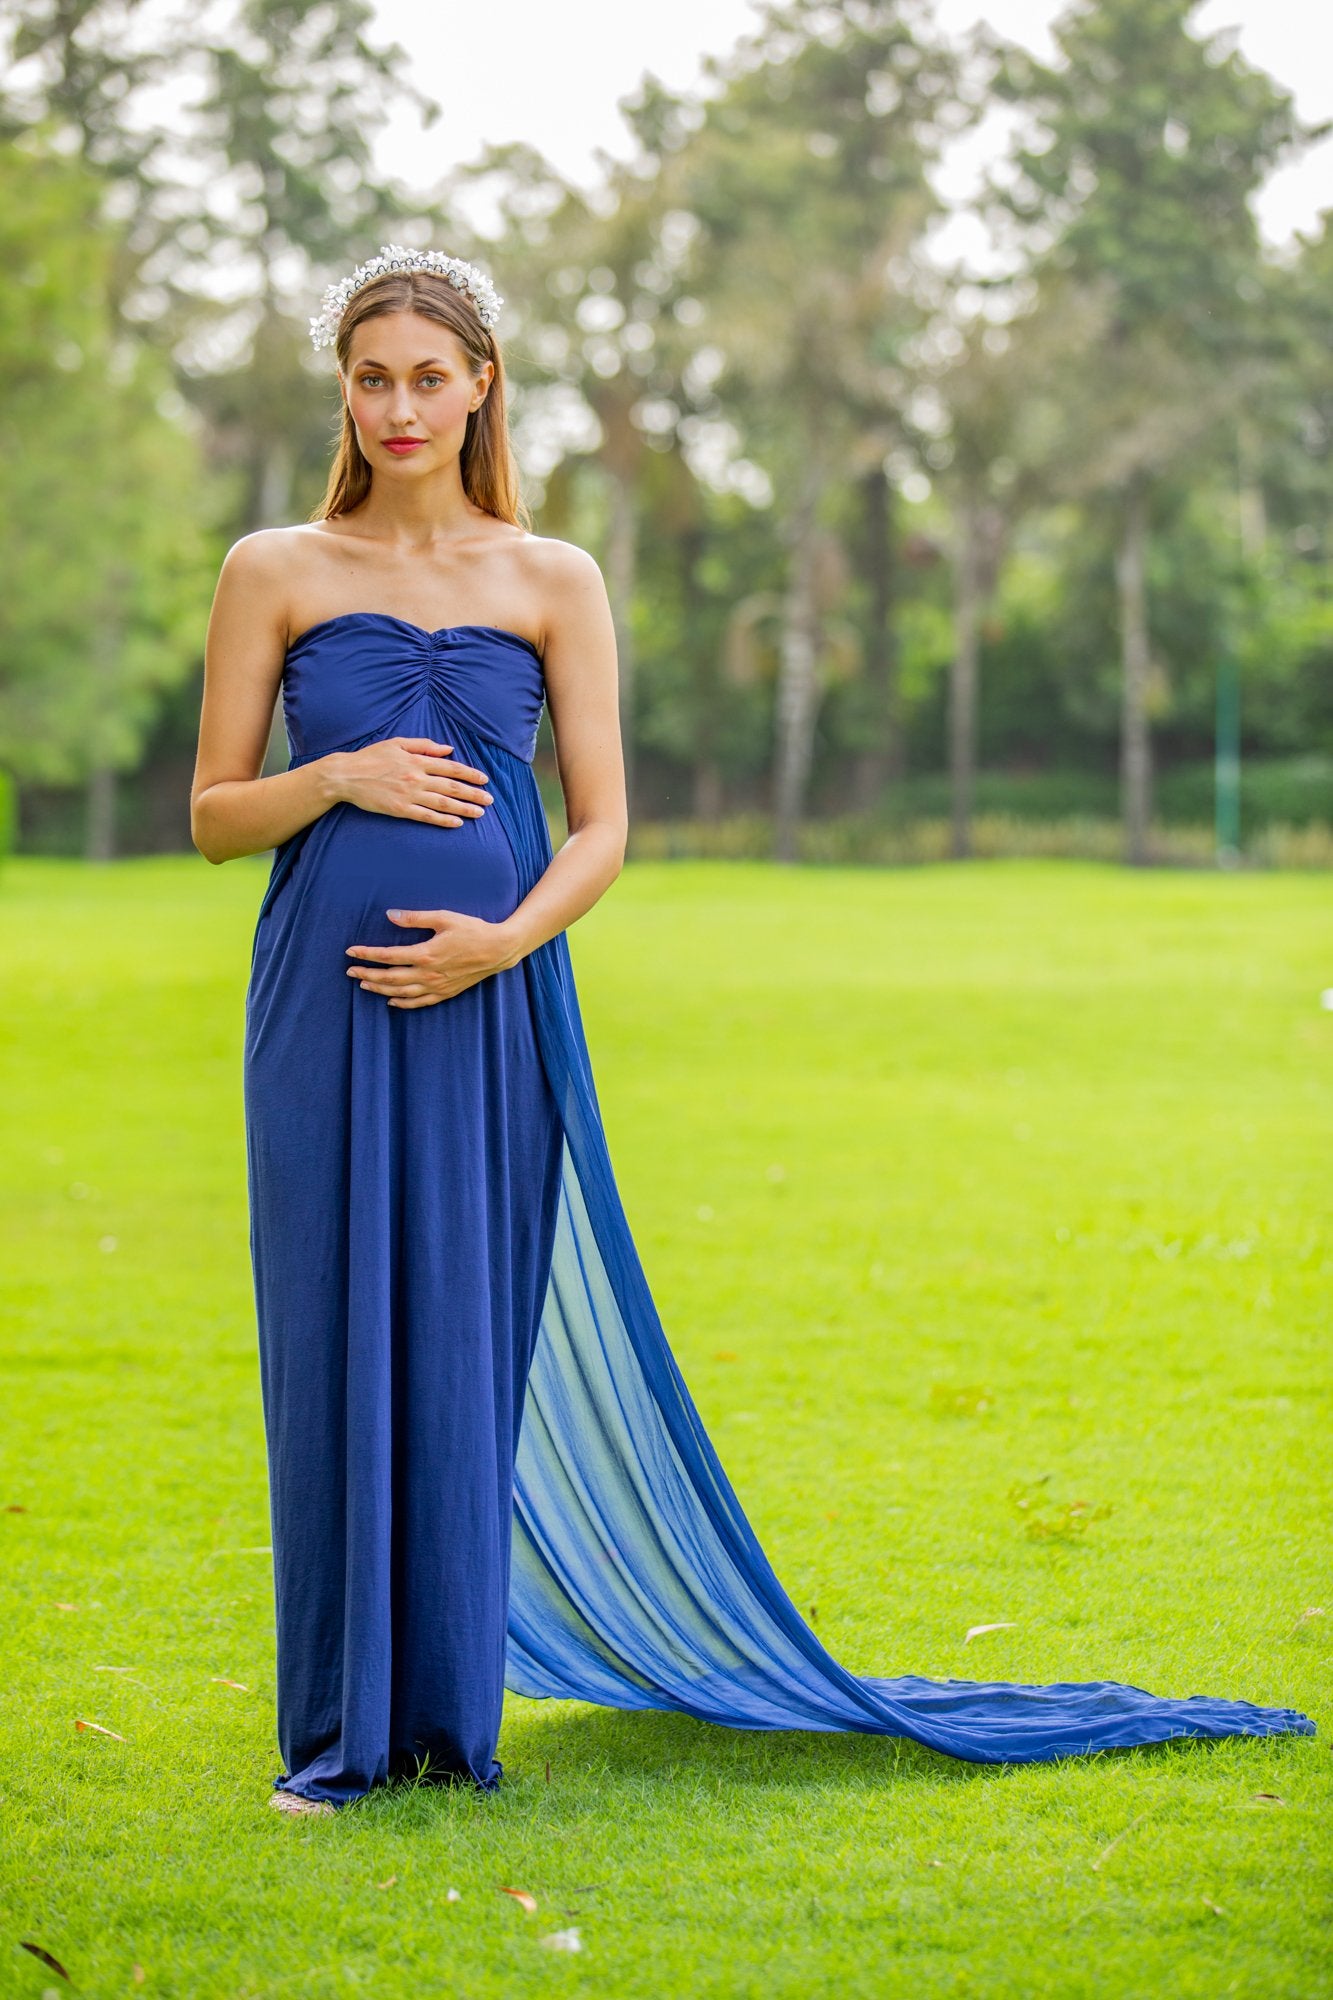 Pregnancy Photo Shoot Dress Ideas - Capturing the Beauty of Motherhood -  Being The Parent